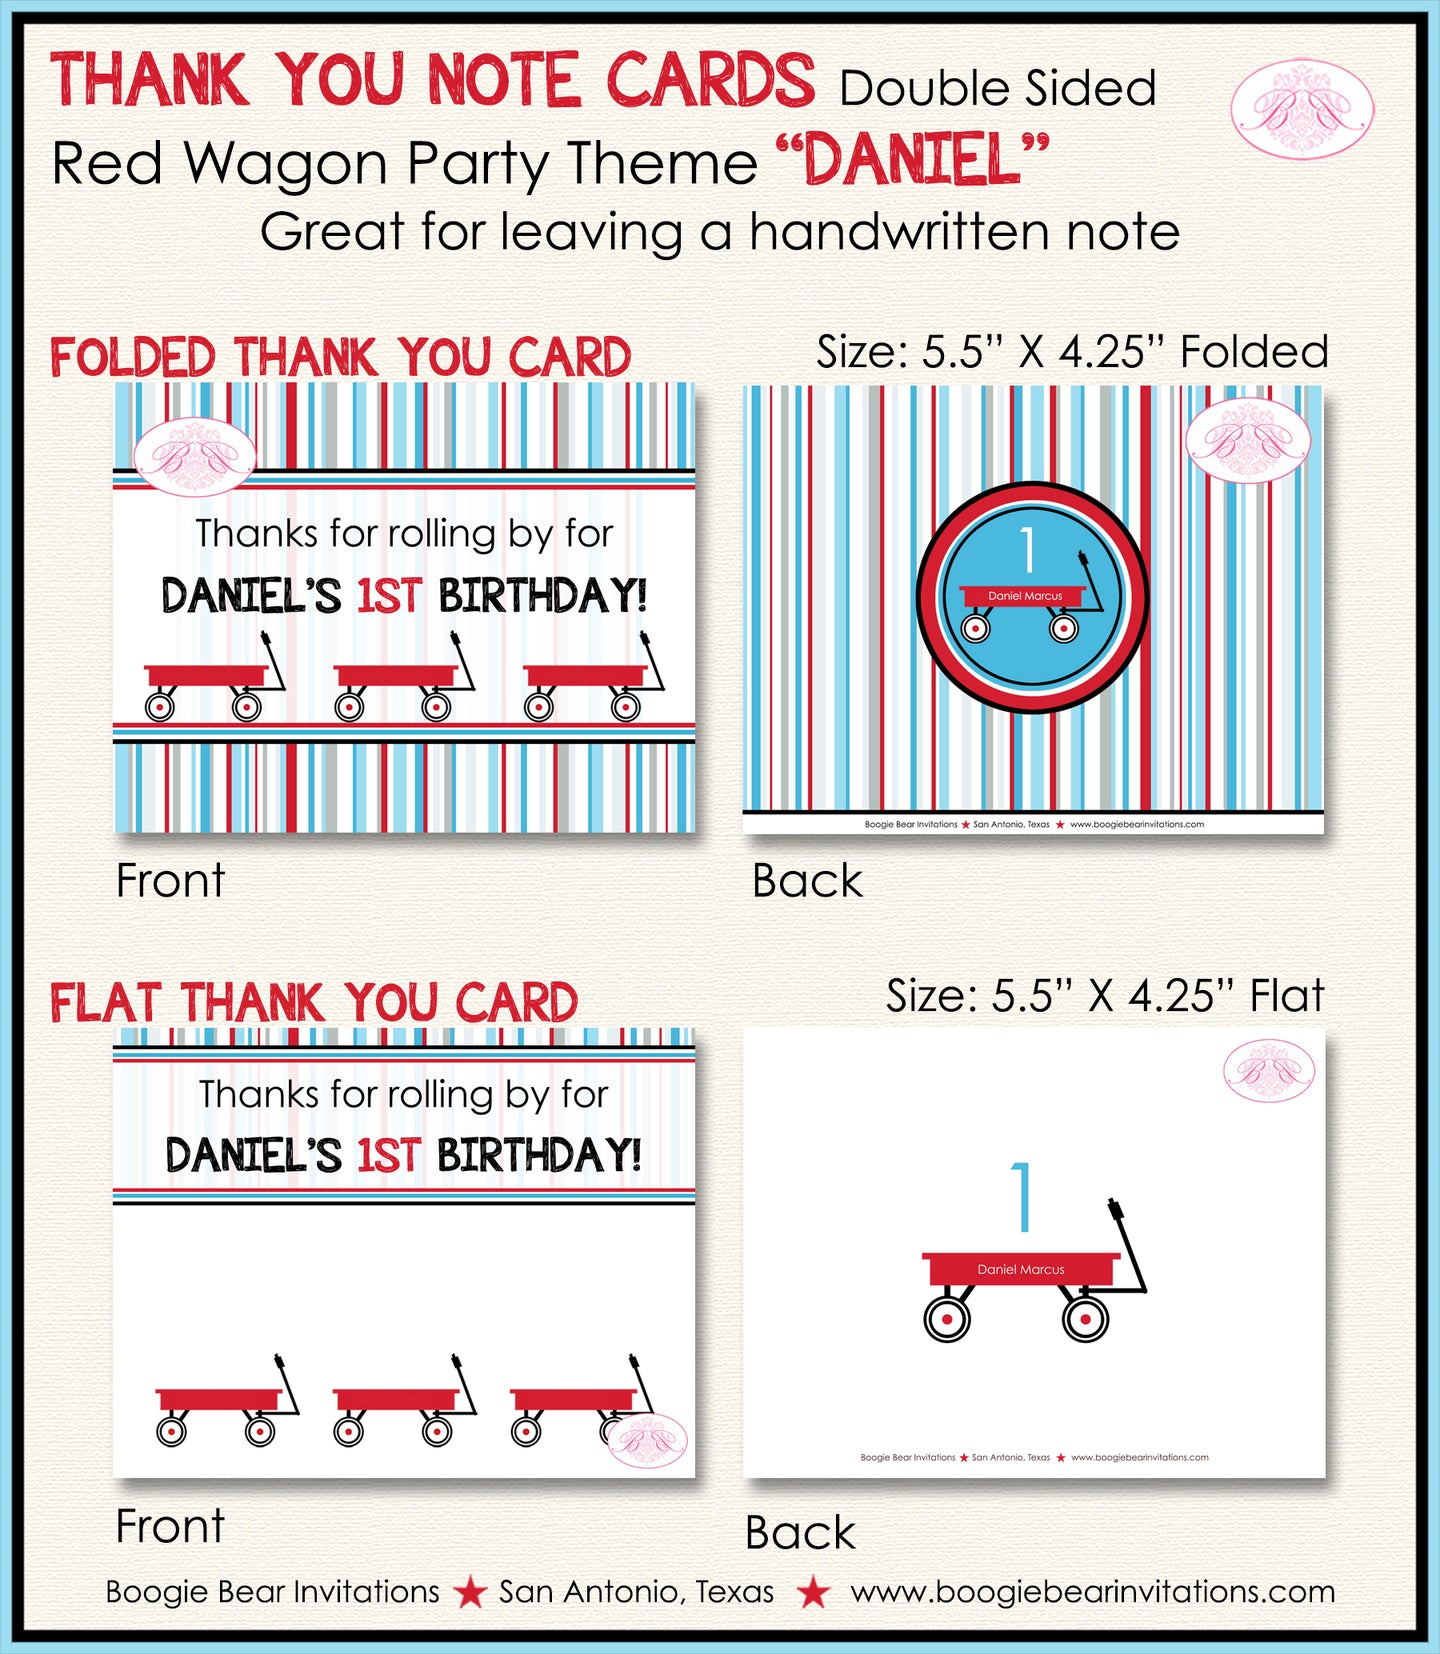 Red Wagon Birthday Party Thank You Card Birthday Boy Girl Ride Boogie Bear Invitations Daniel Theme Printed